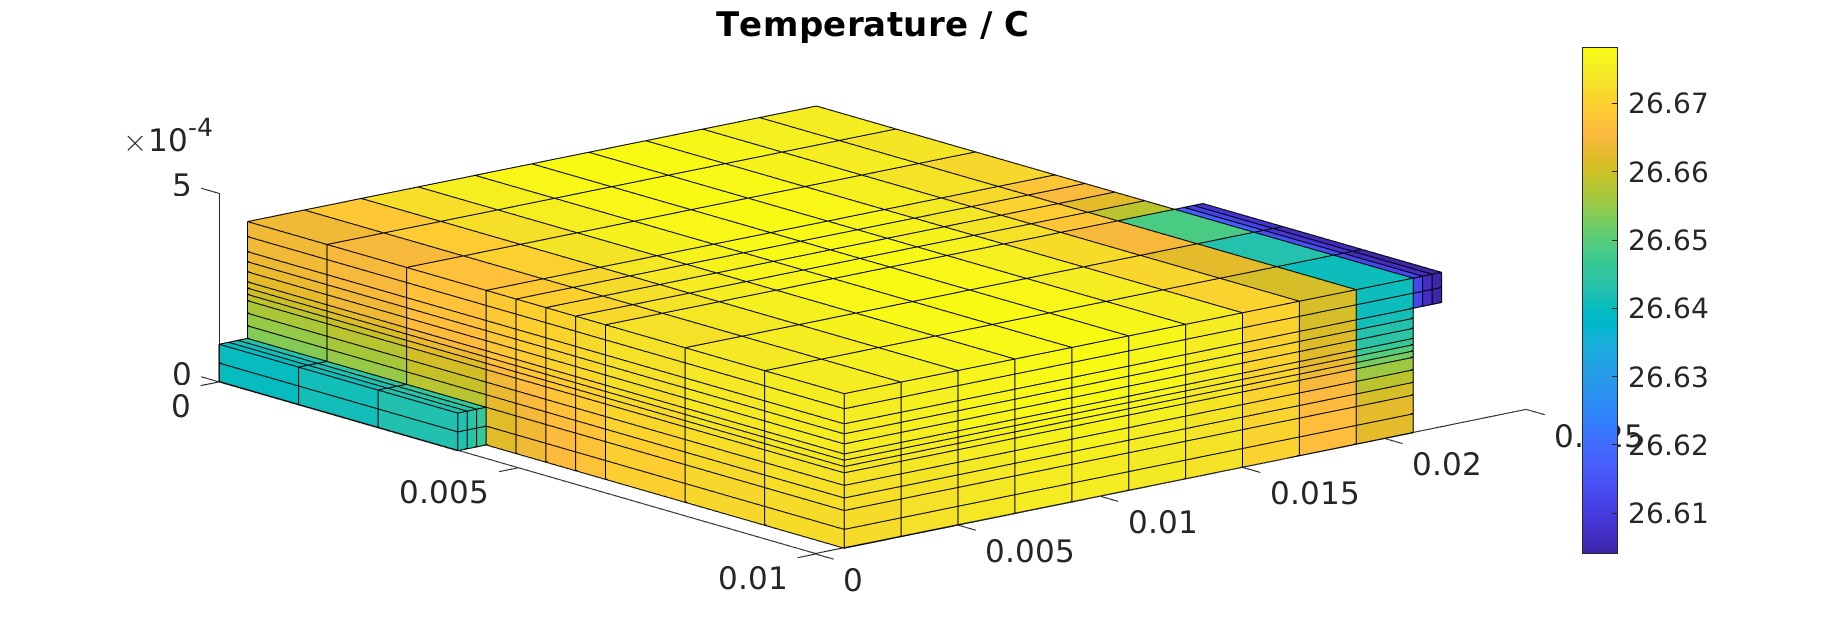 _images/temperature_distribution.png